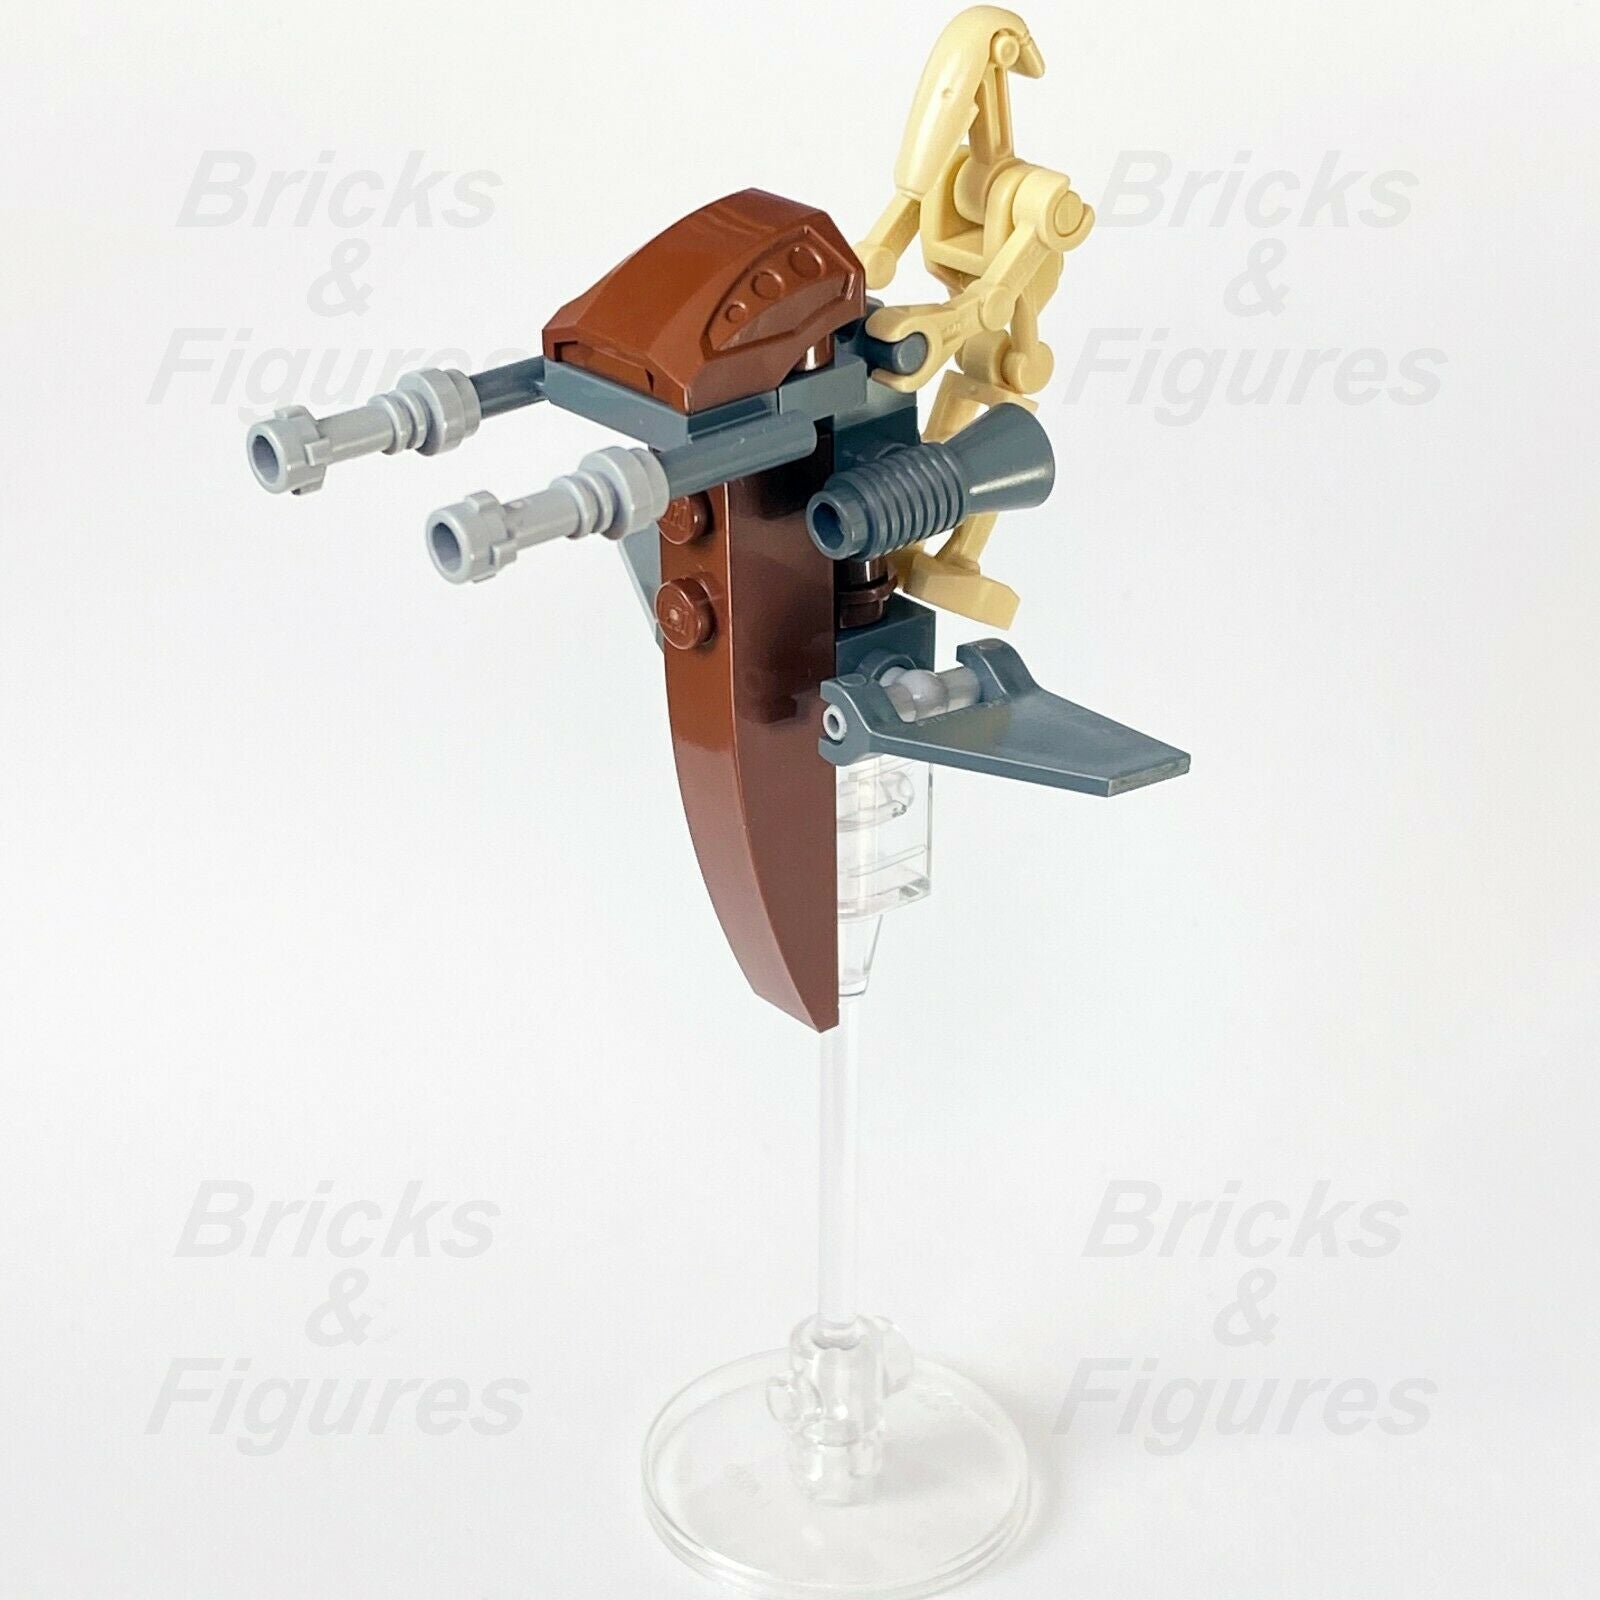 New Star Wars LEGO® STAP Repulsorcraft Set with Battle Droid Minifigure 30058 - Bricks & Figures